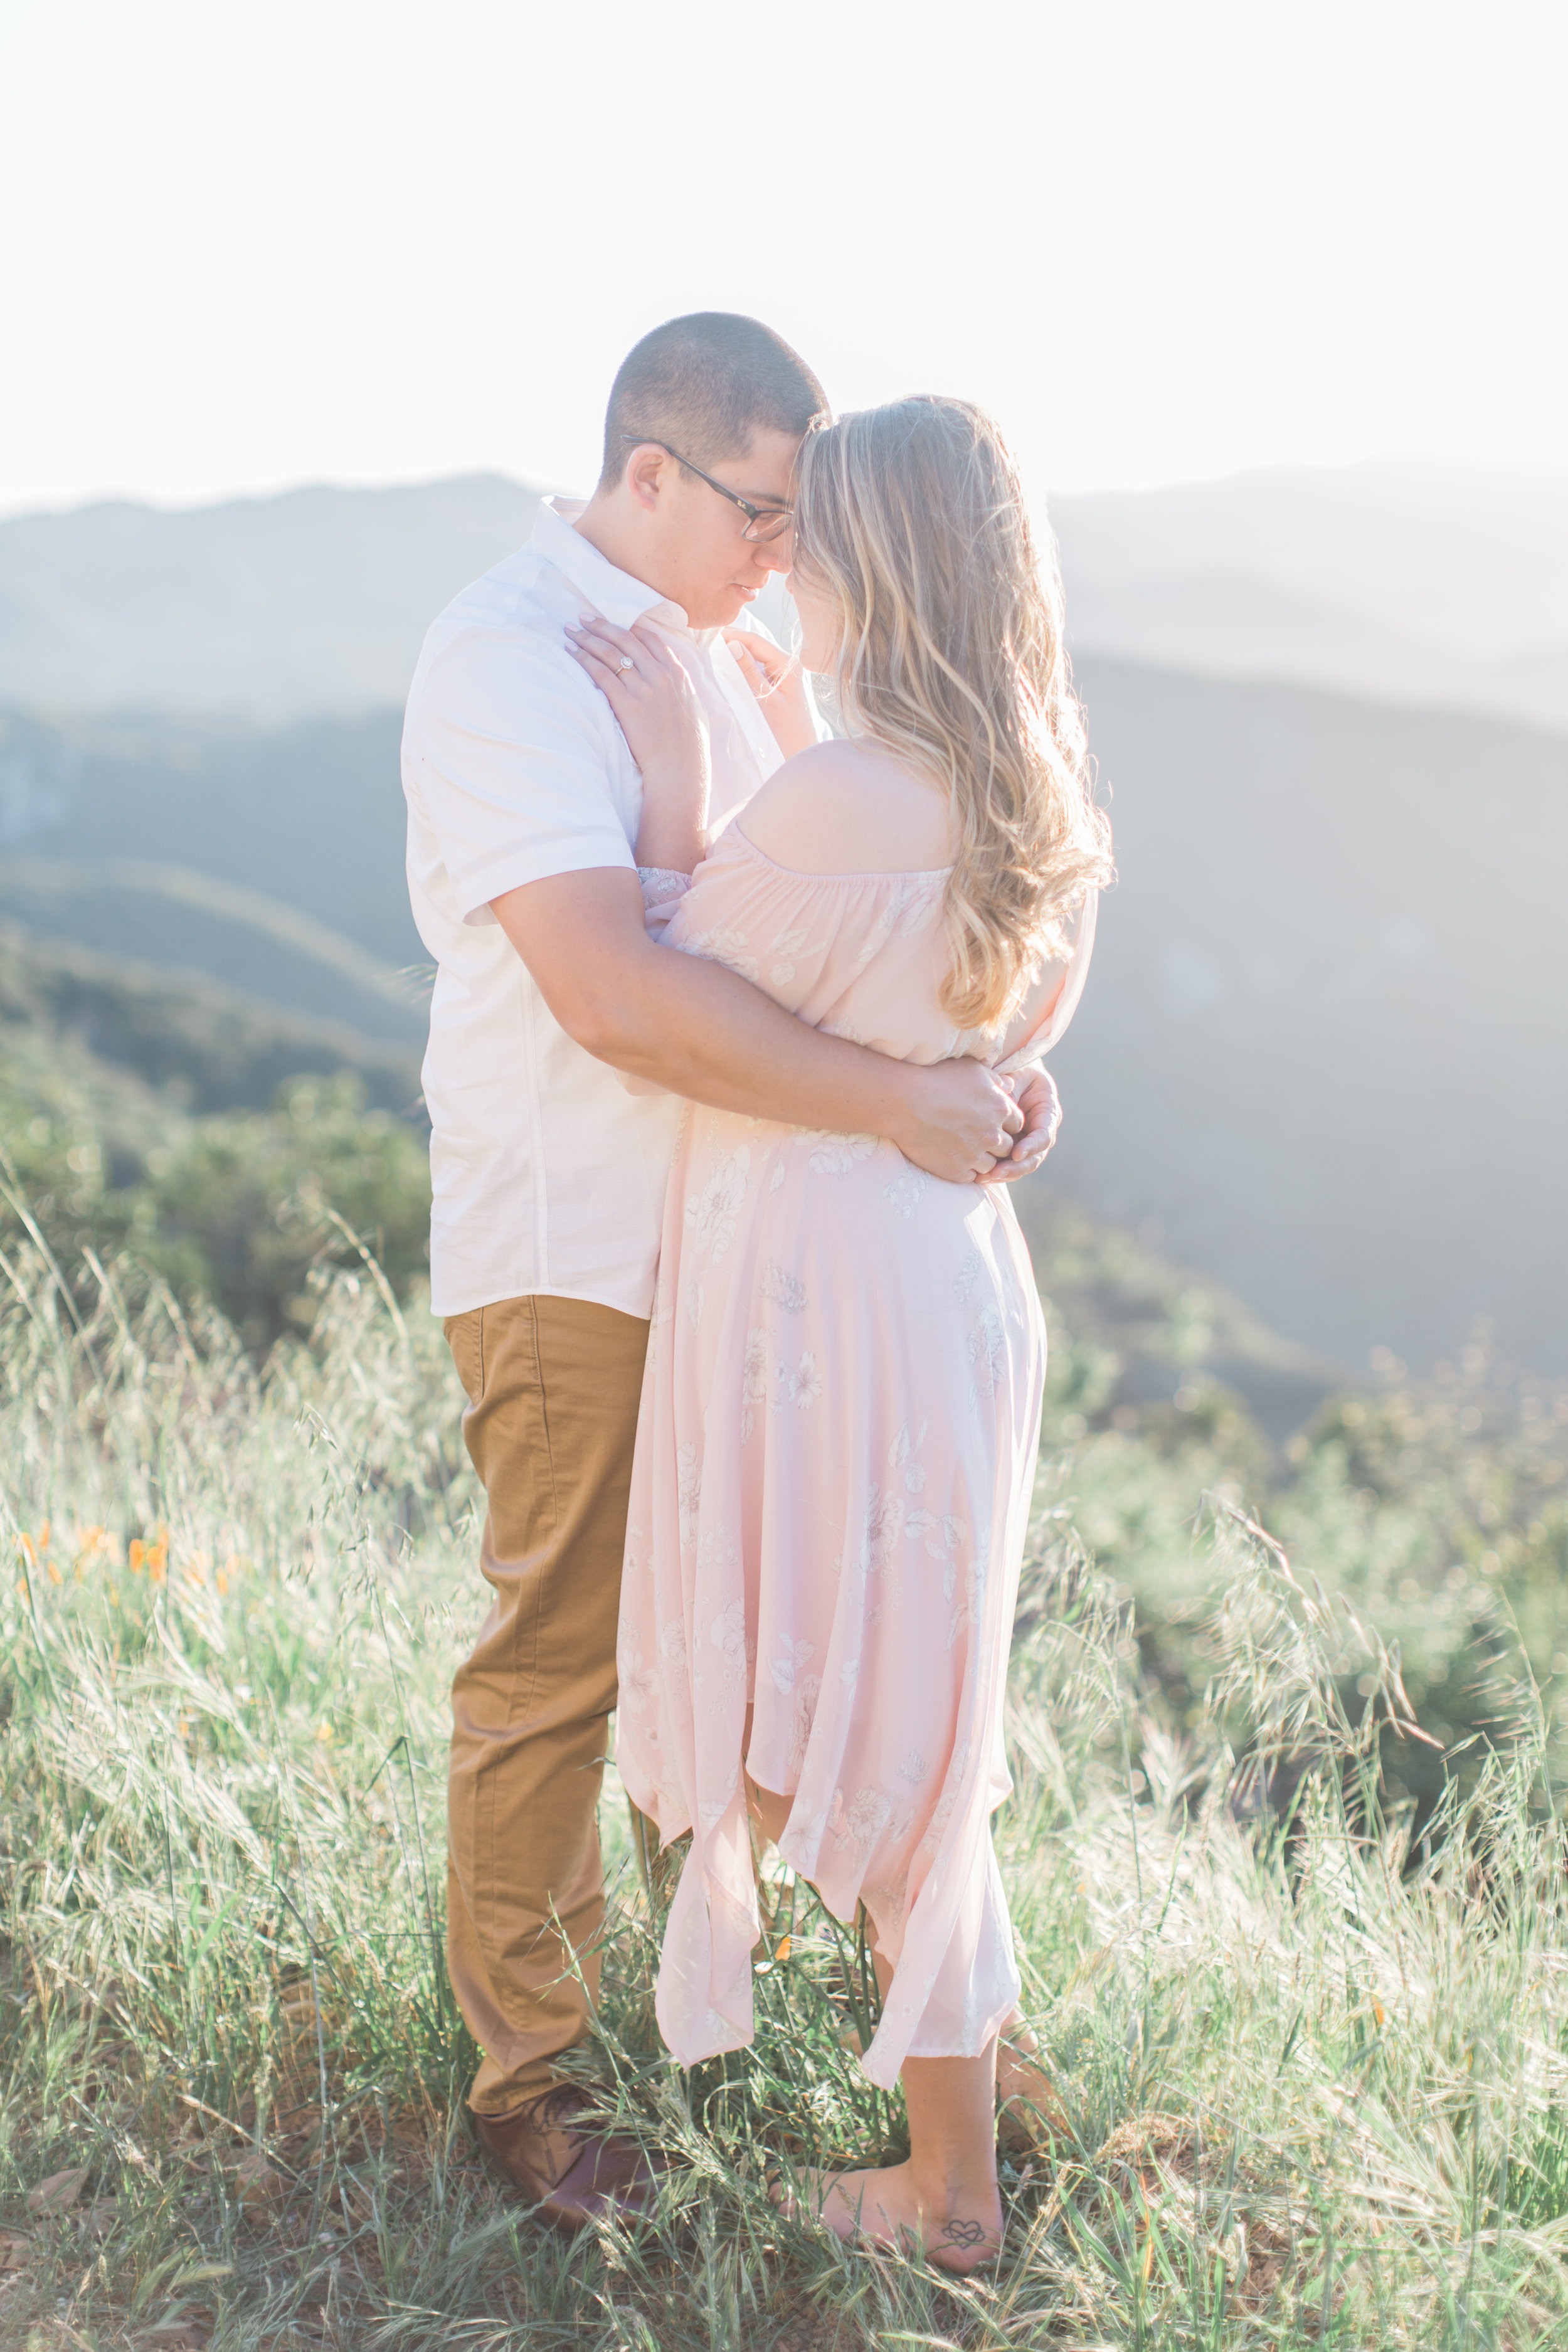 Santa Monica Mountains Engagement Photos - The Overwhelmed Bride Wedding Blog